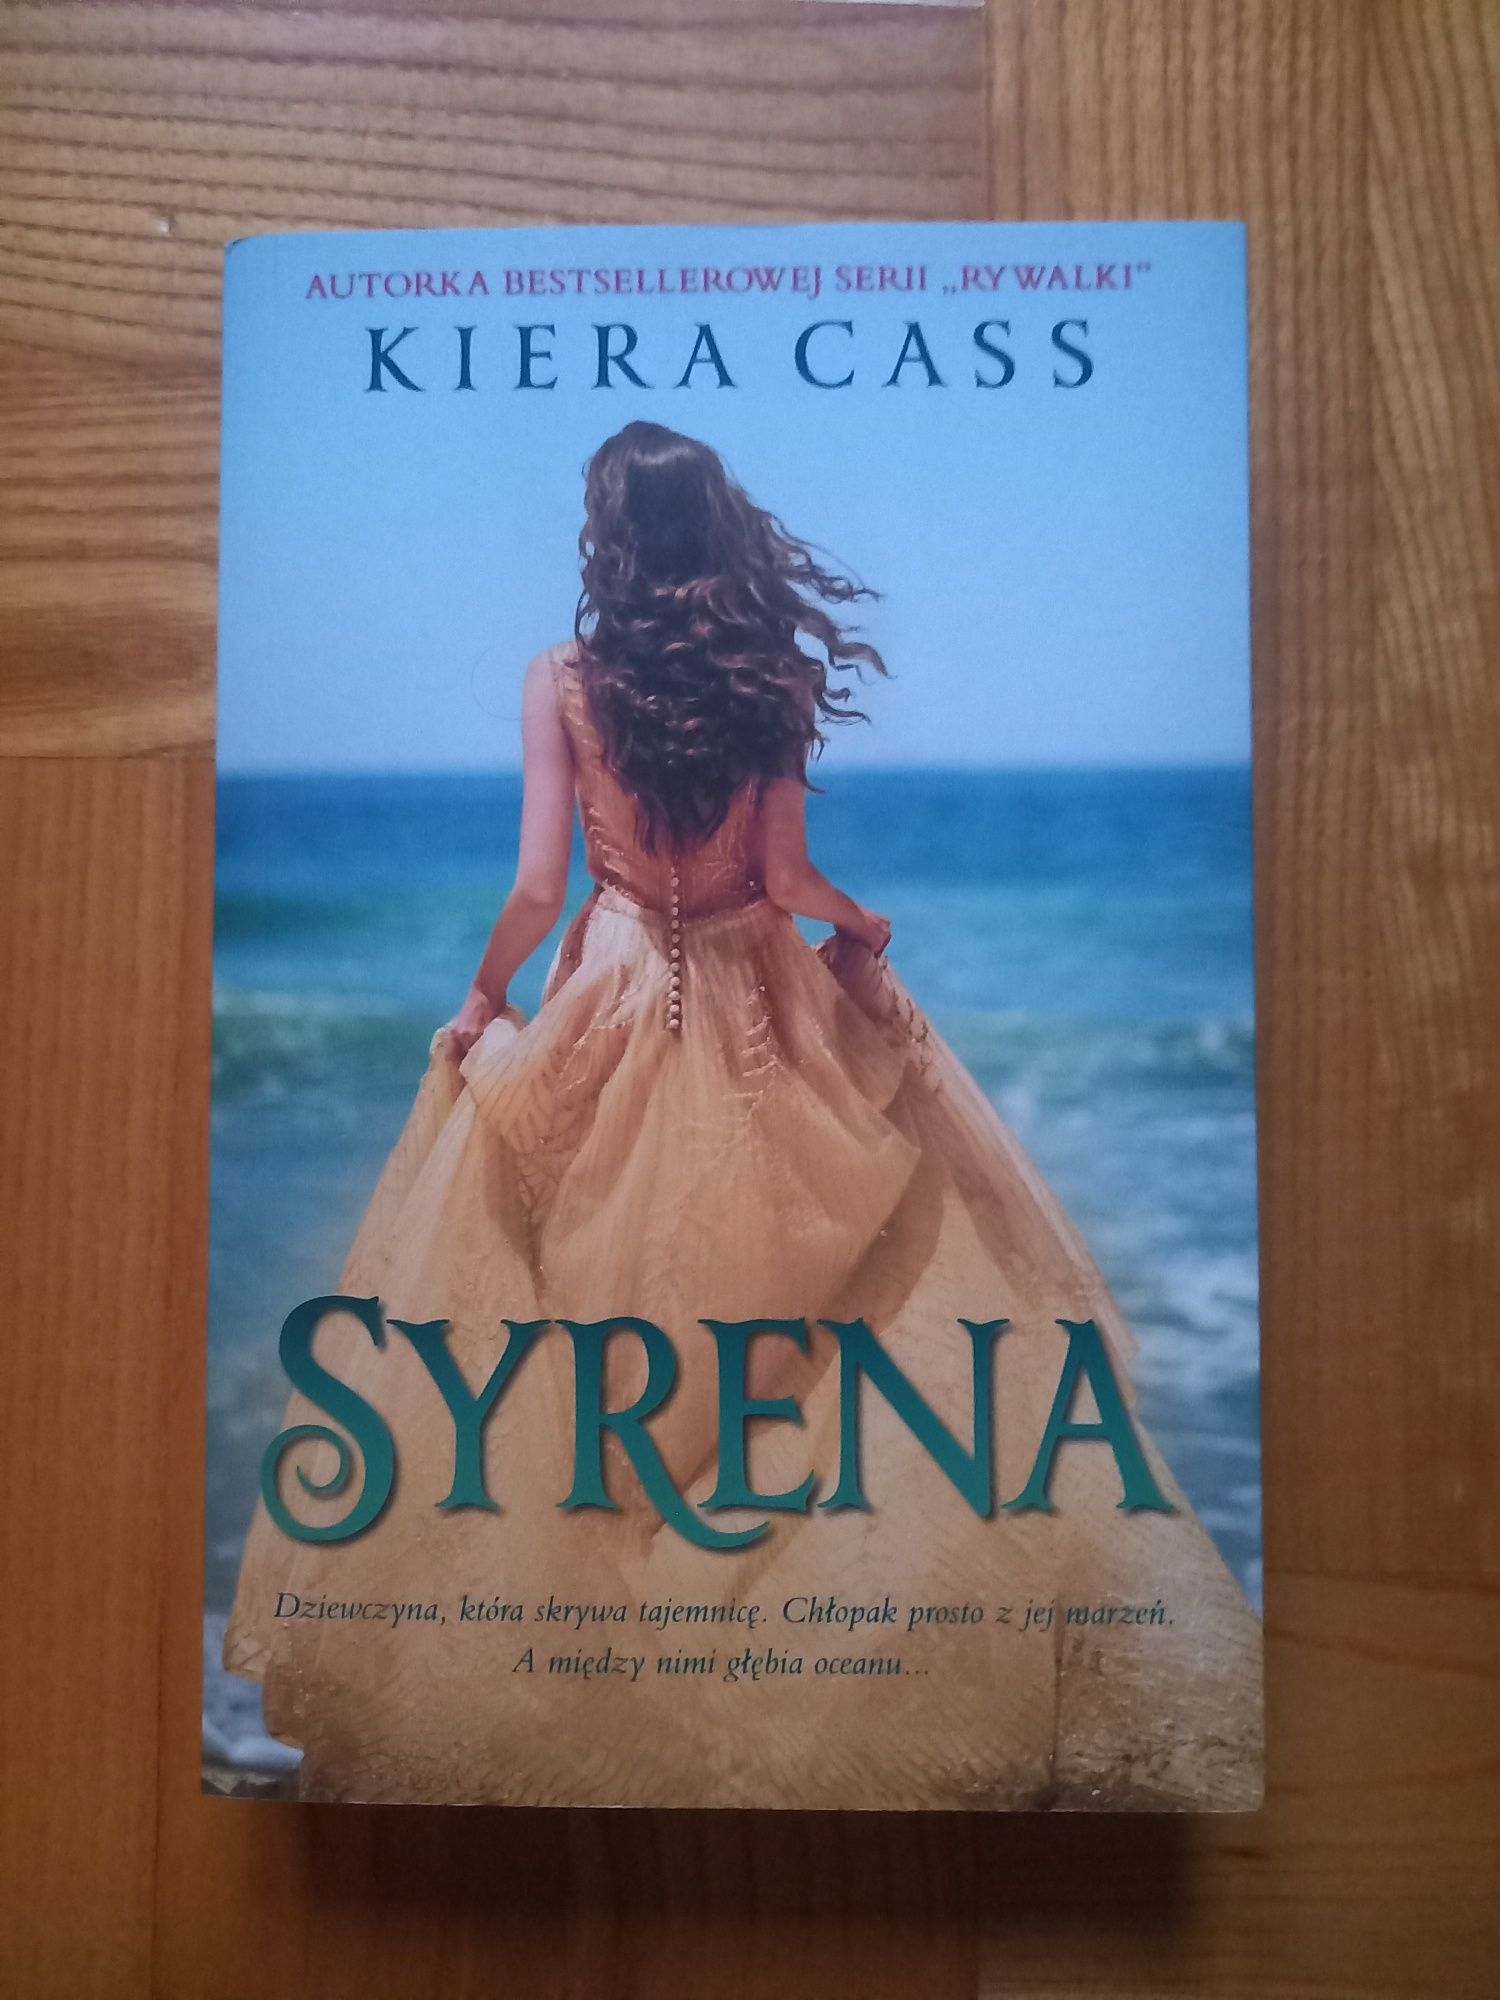 "Syrena" Kiera Cass